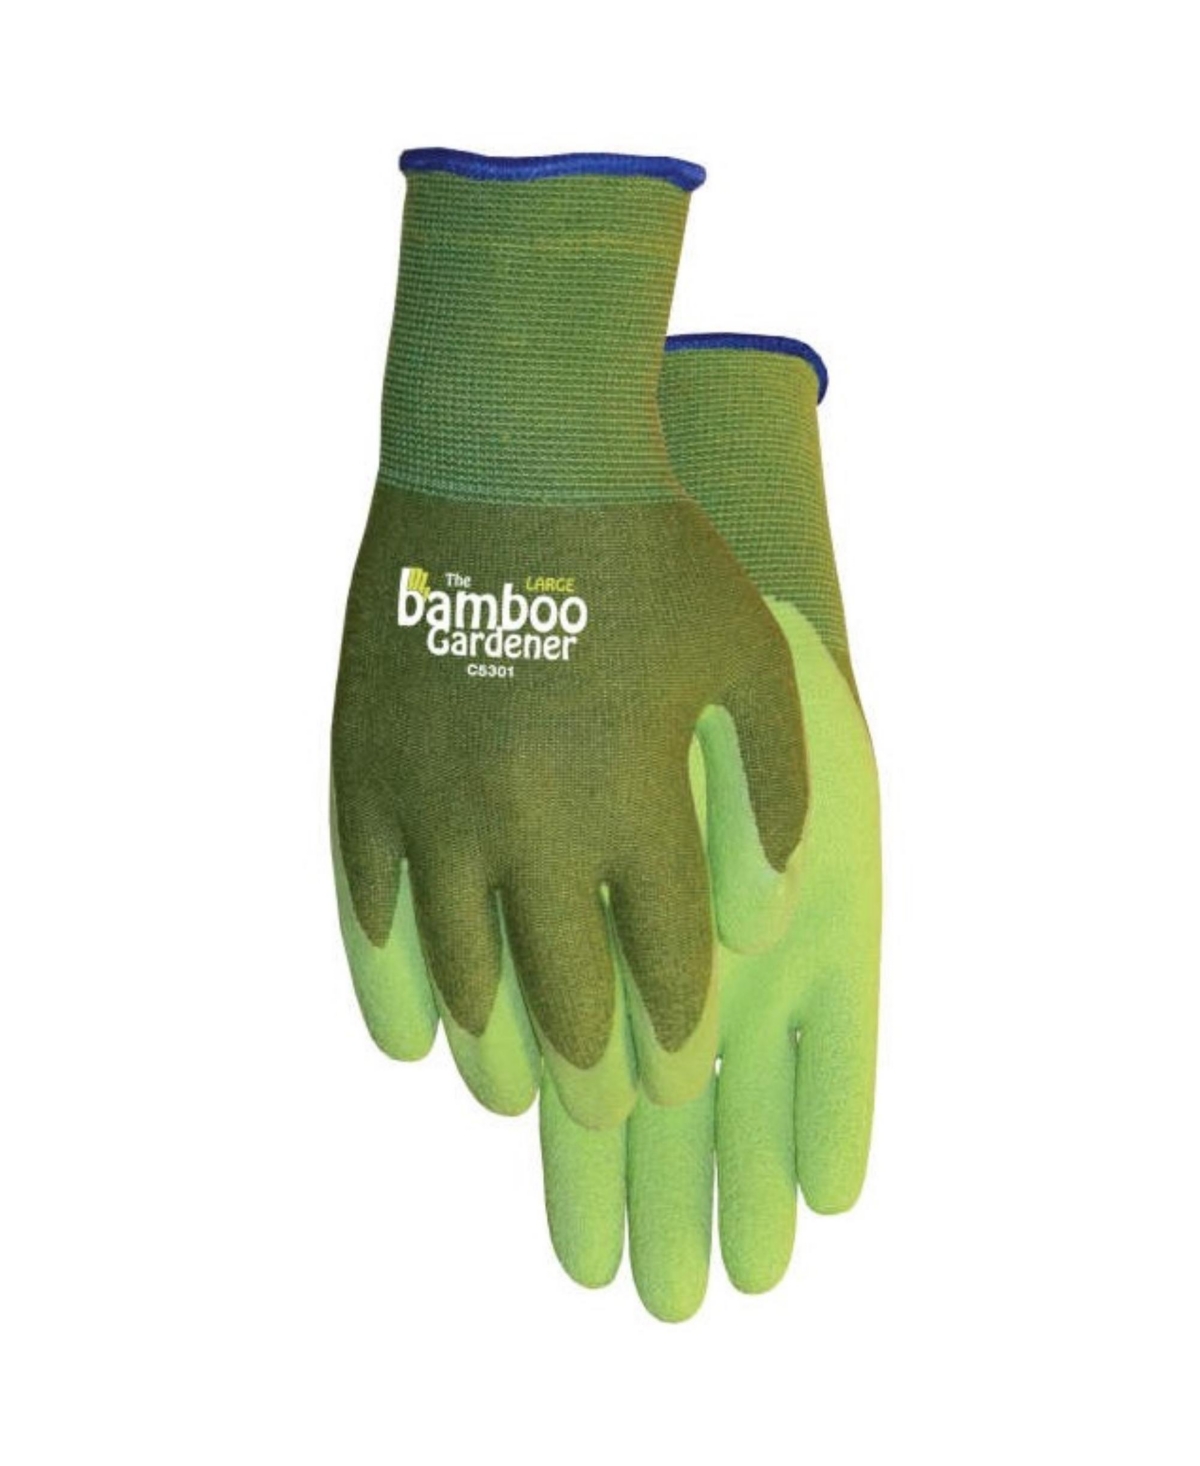 Bellingham Rayon Gardner Rubber Palm Gloves, Size Large - Green